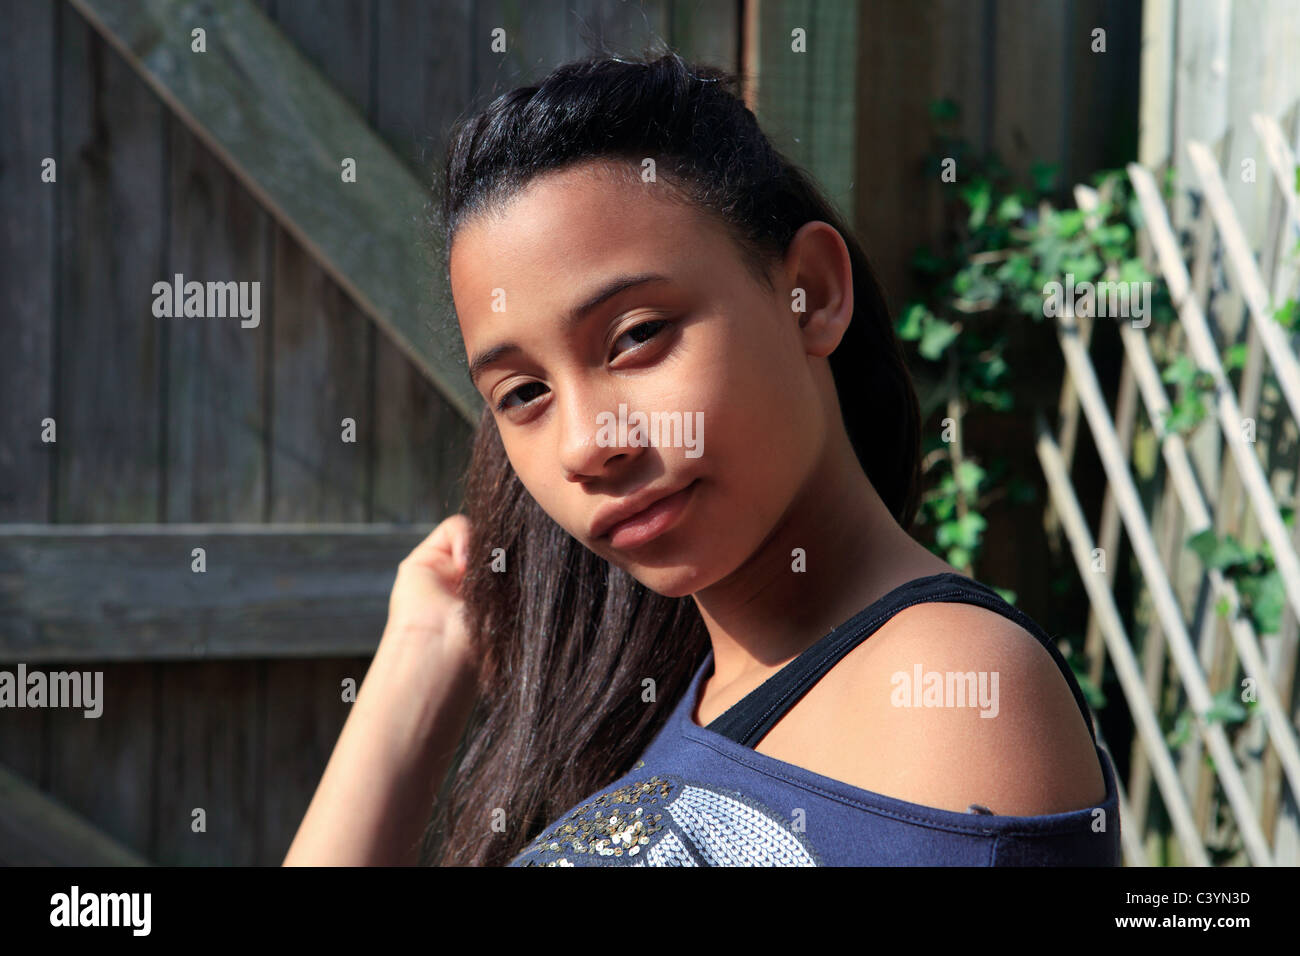 united kingdom portrait of a teenage mixed race girl Stock Photo